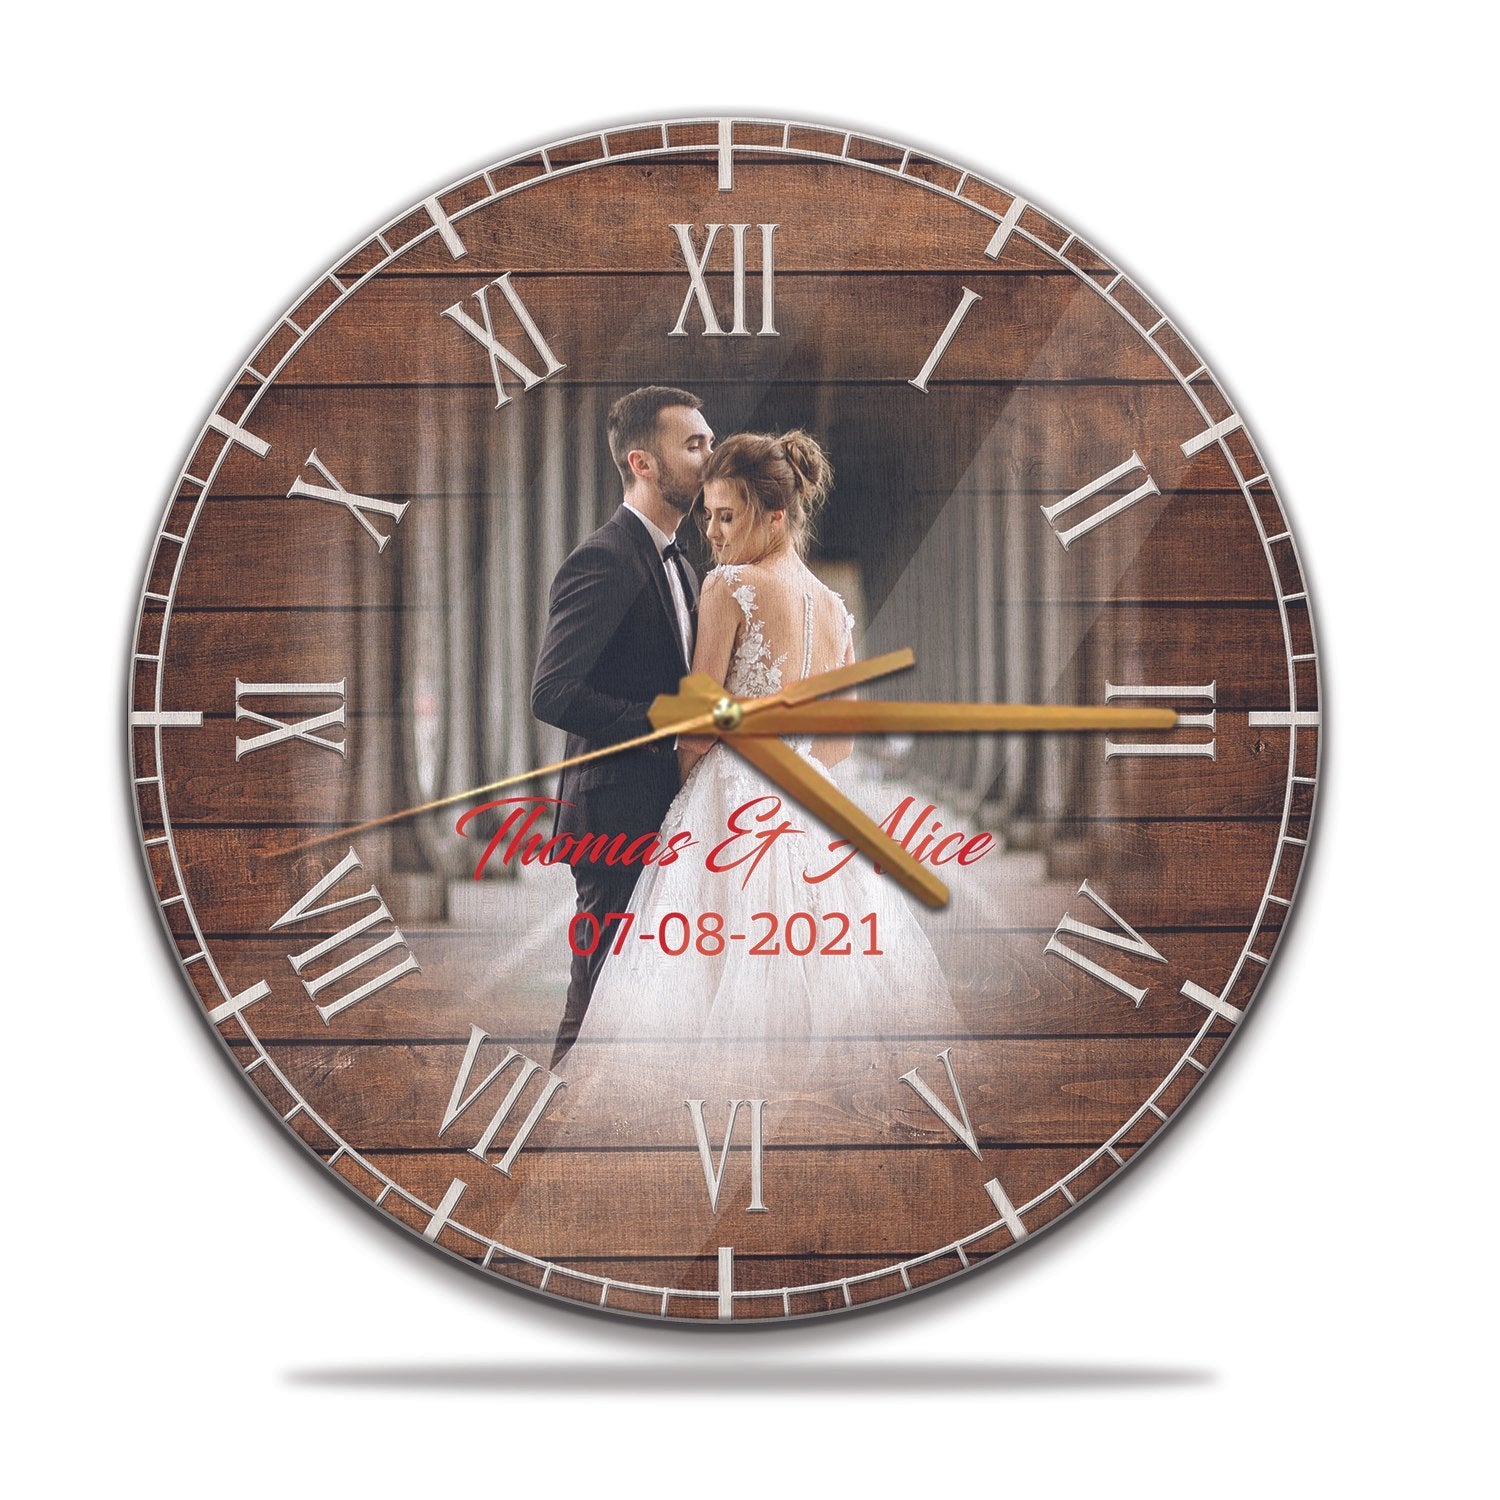 Custom Photo, Personalized Name, Date, Wood Background, Wall Clock